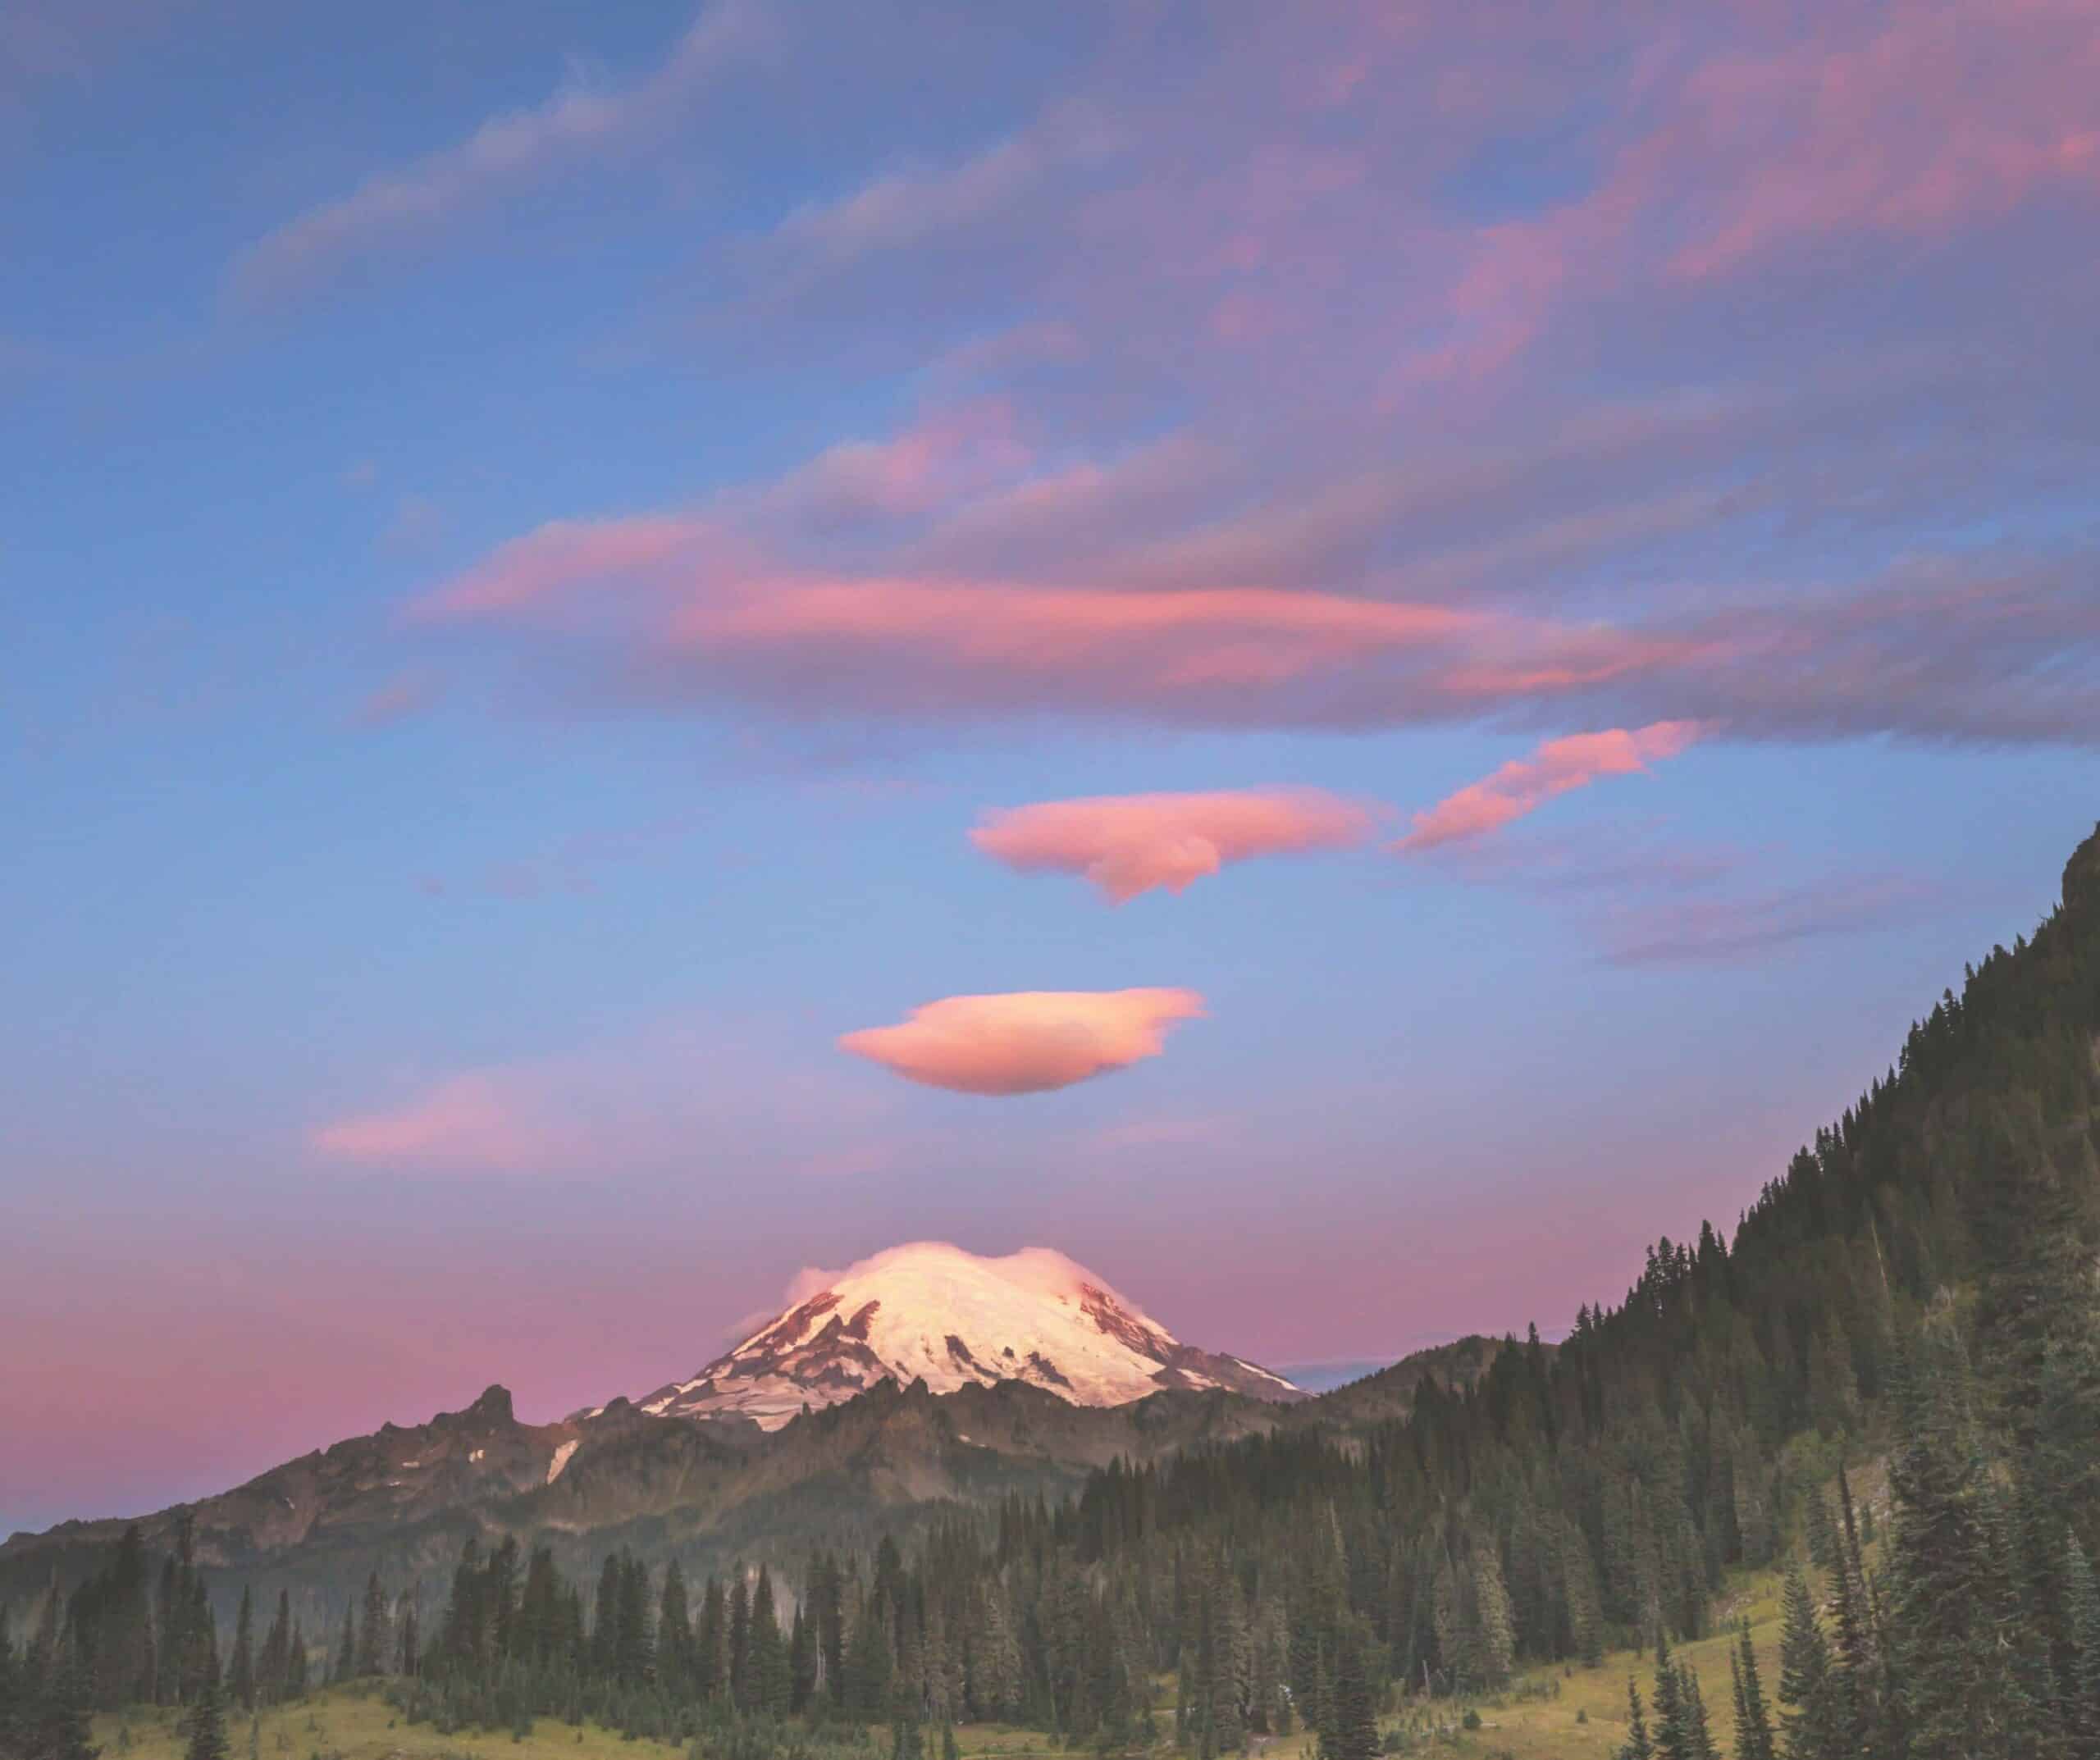 Seattle: Mount Rainier Park All-Inclusive Small Group Tour